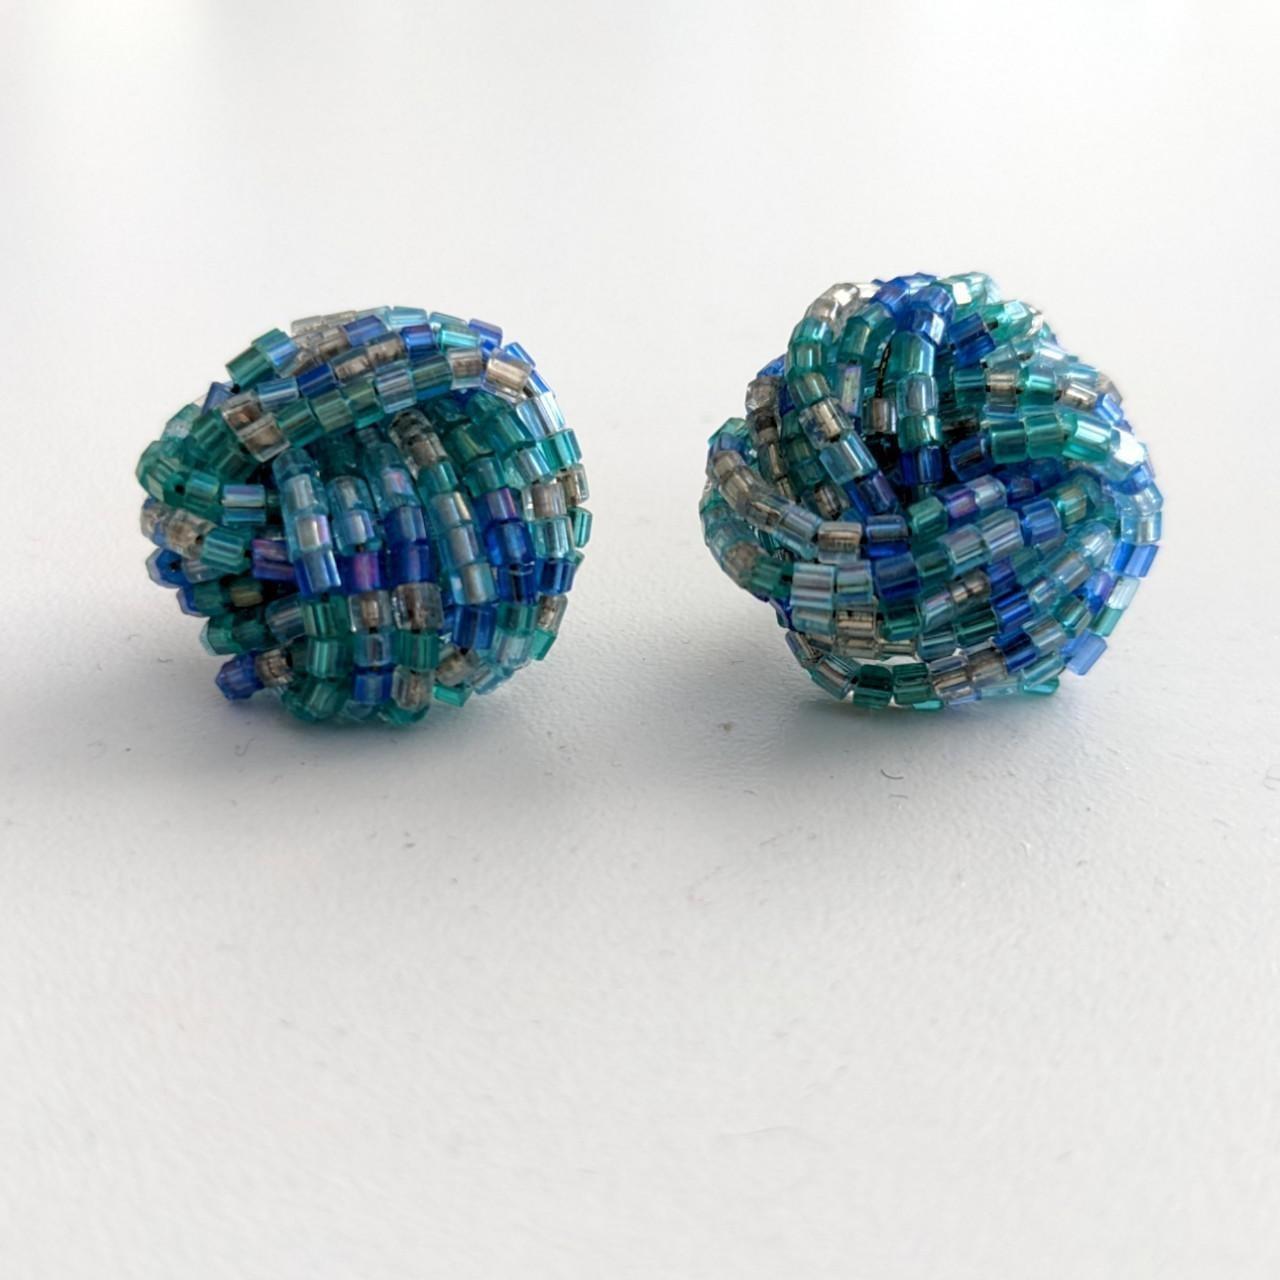 Product Image 1 - Beaded Knot Earrings

Beautiful blue green